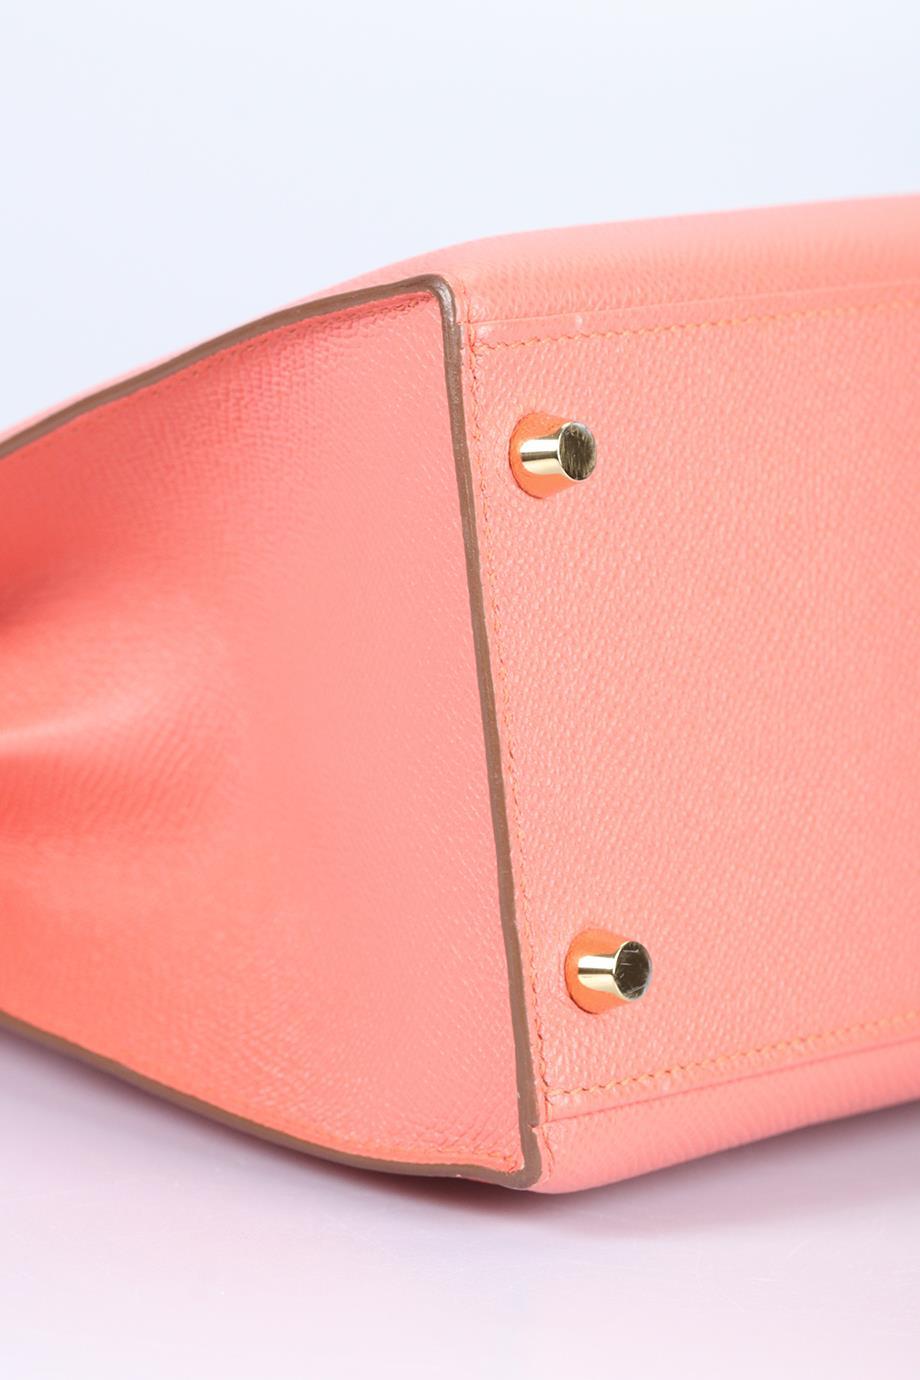 Hermès 2014 Kelly Ii Sellier 28 Cm Epsom Leather Bag For Sale 5